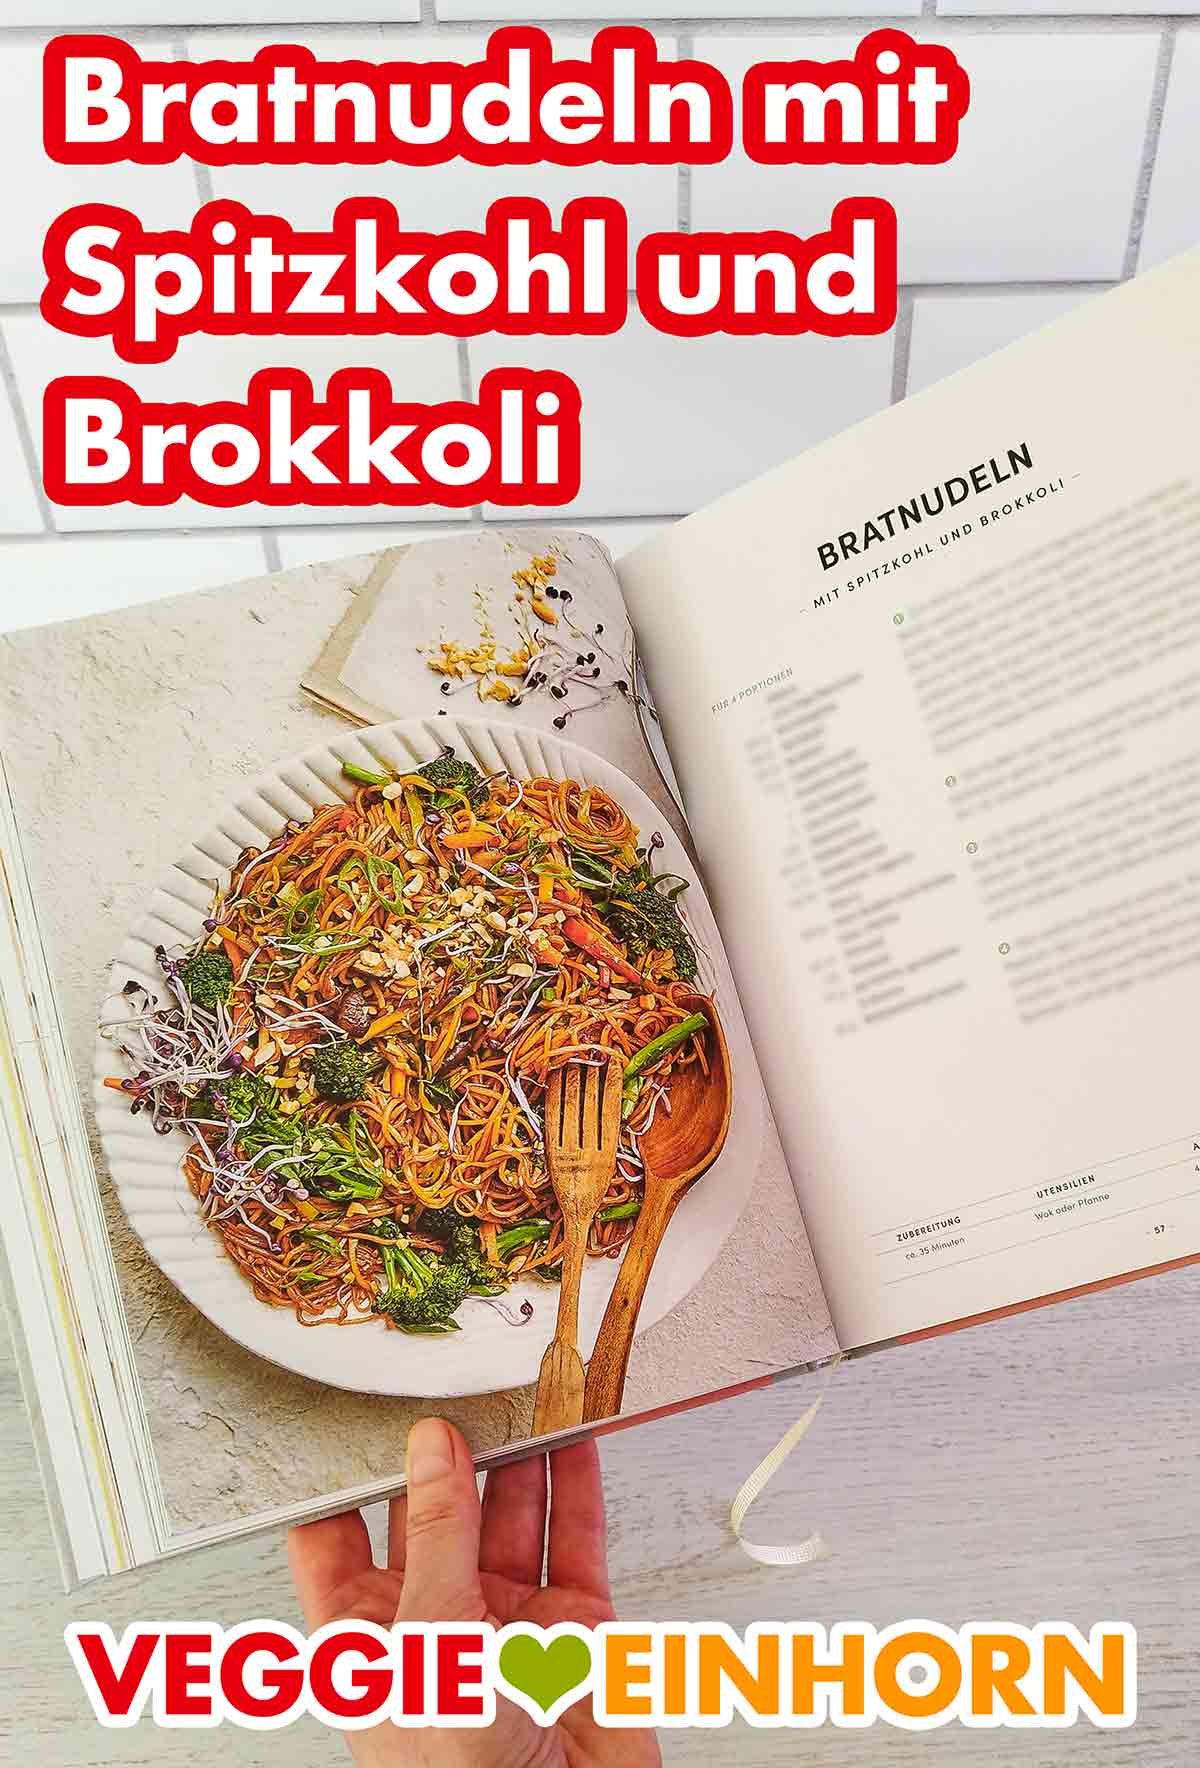 Bratnudeln mit Spitzkohl und Brokkoli im Voll Vegan Kochbuch von Edeka